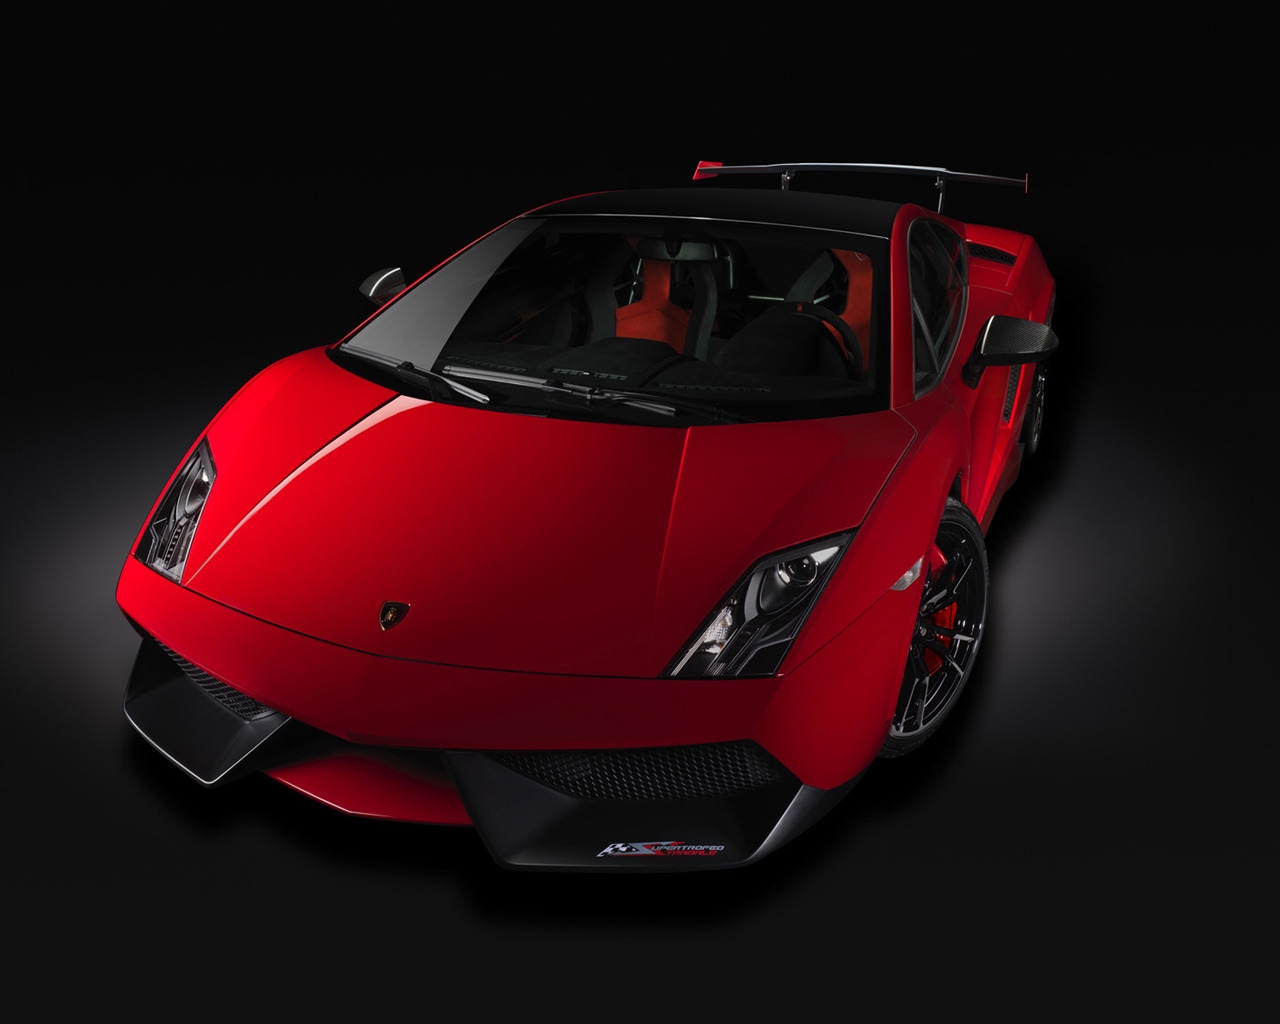 Lamborghini Gallardo Stradale 2012 for 1280 x 1024 resolution